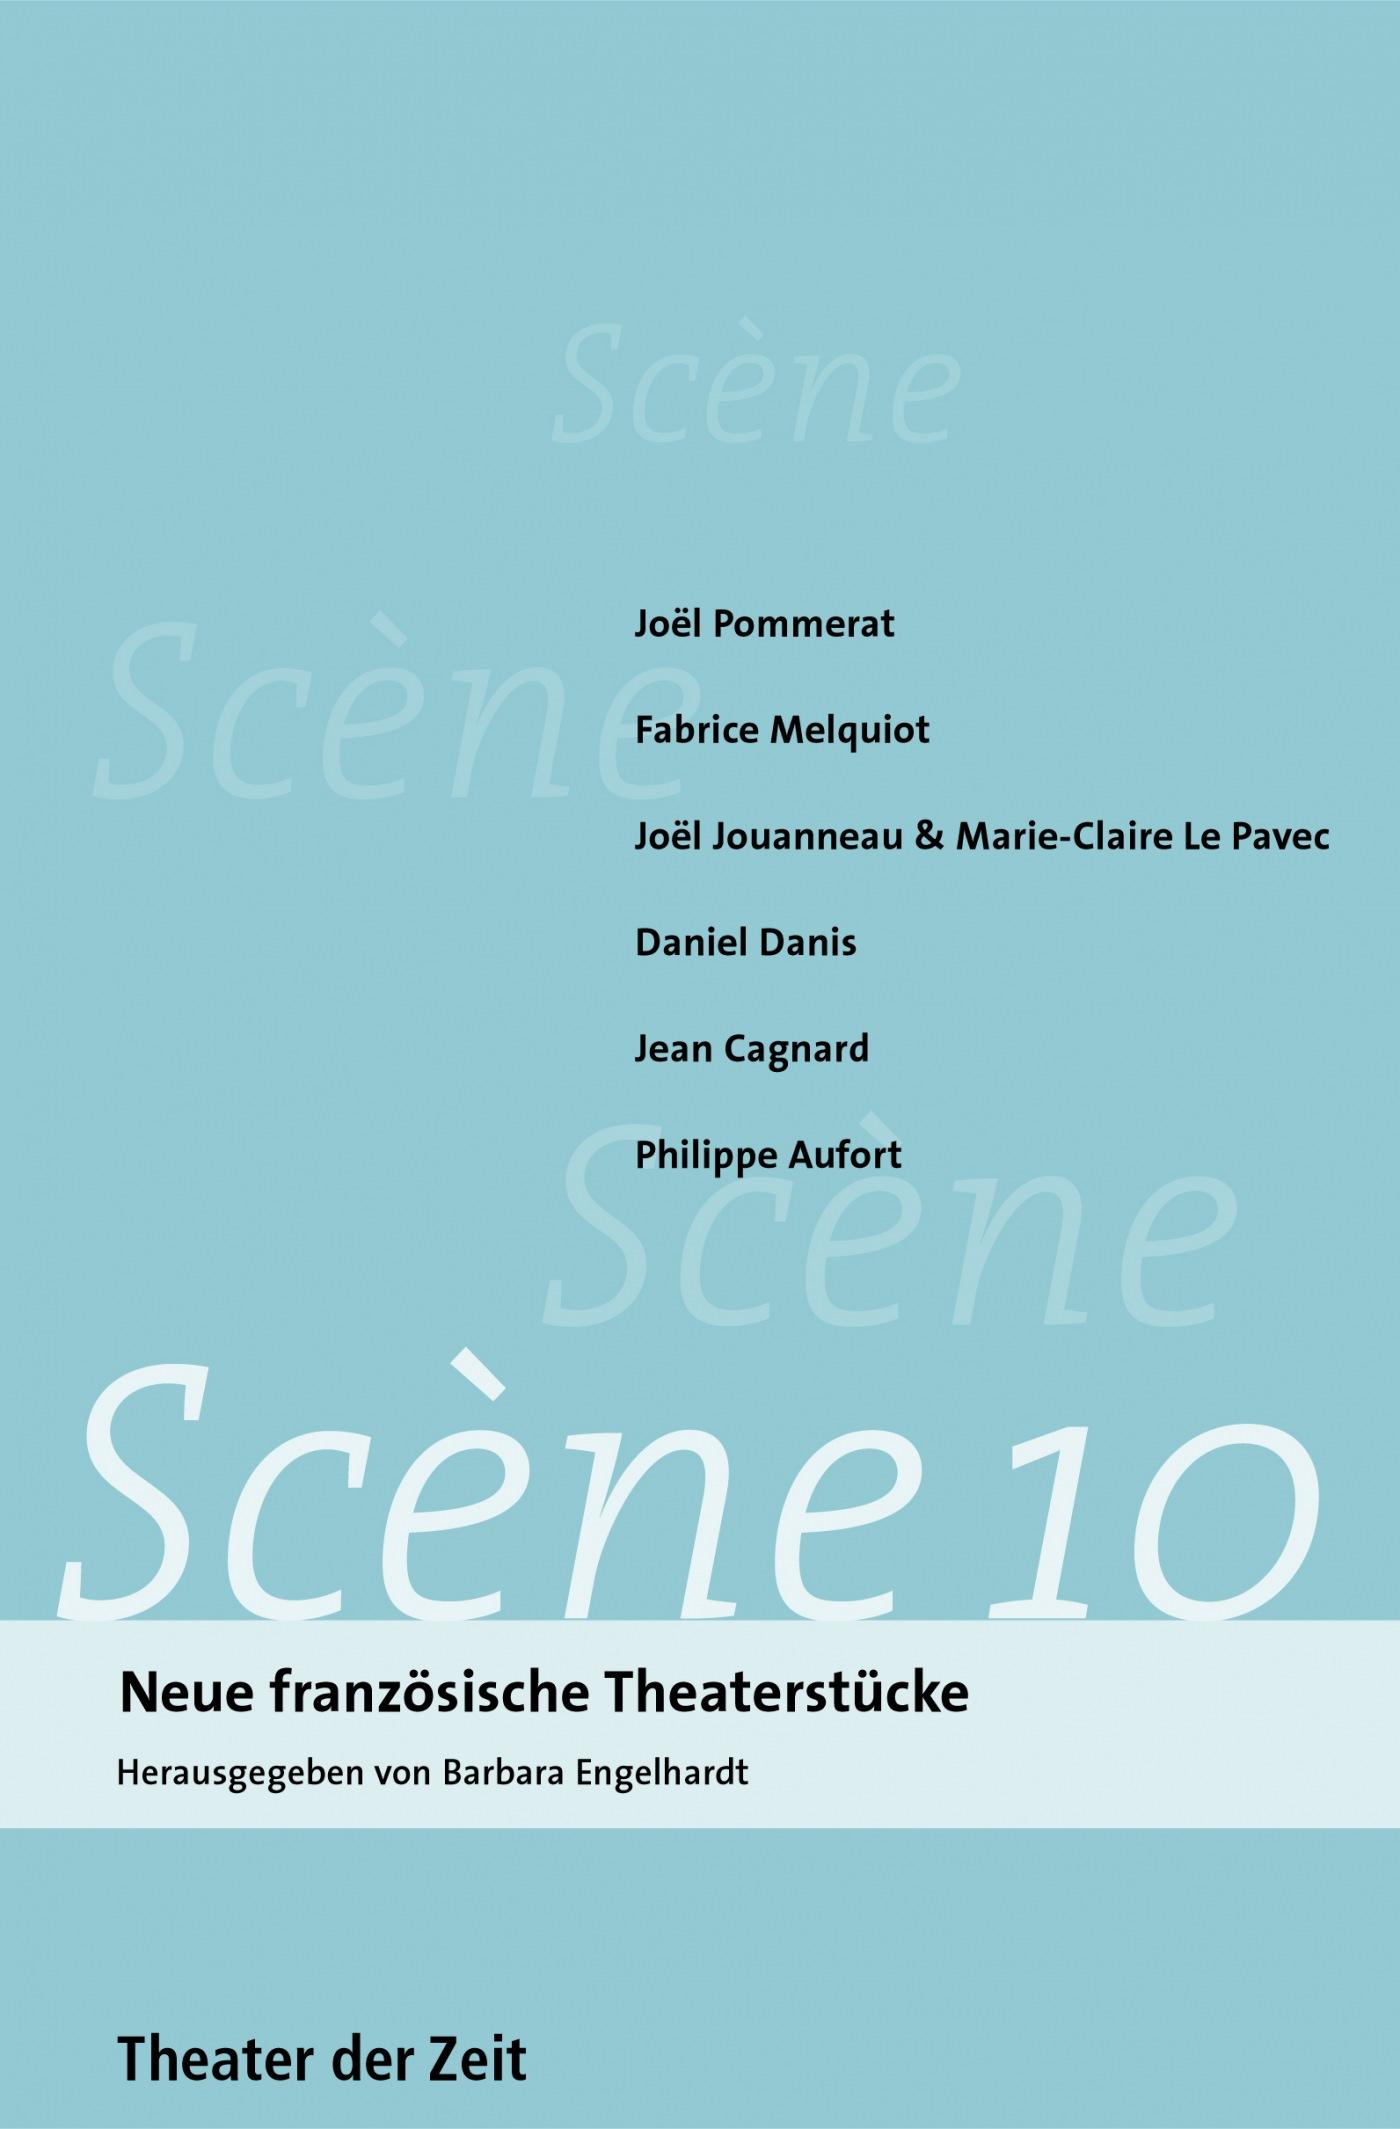 "Scène 10"